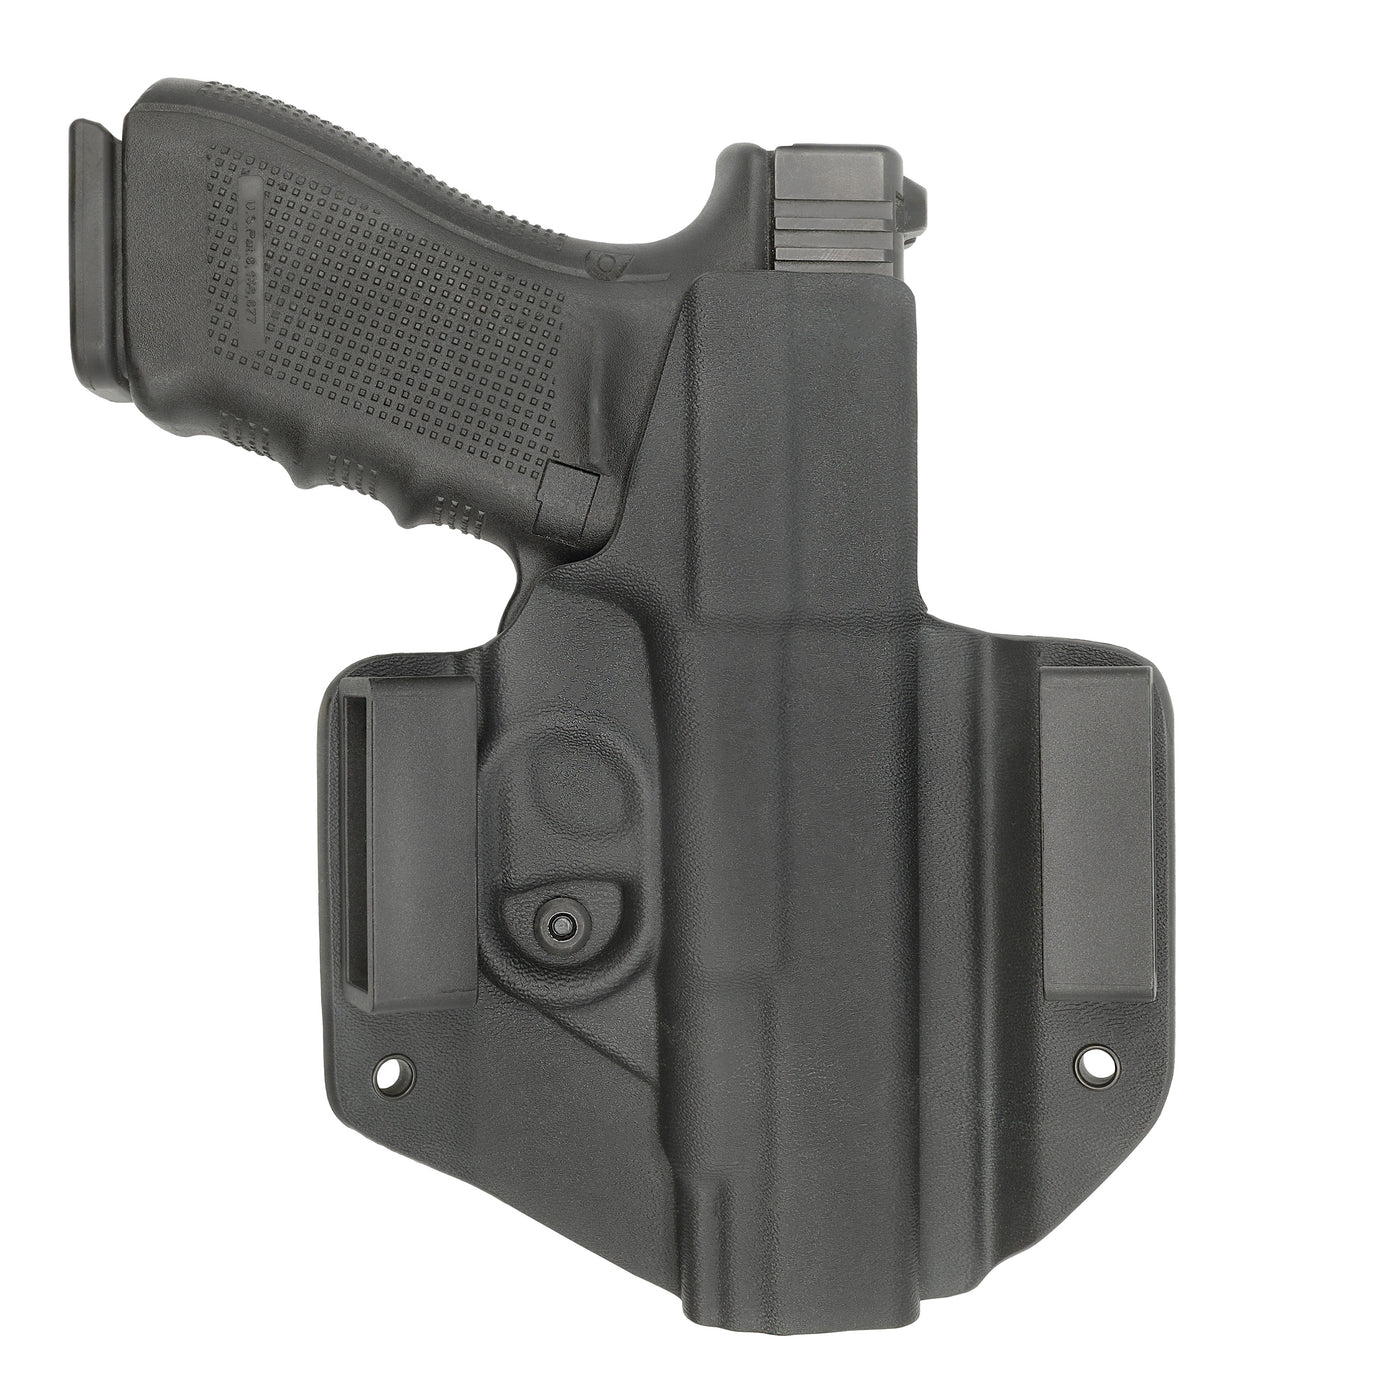 C&G Holsters custom OWB covert Glock 20/21 in holstered position LEFT HAND back view